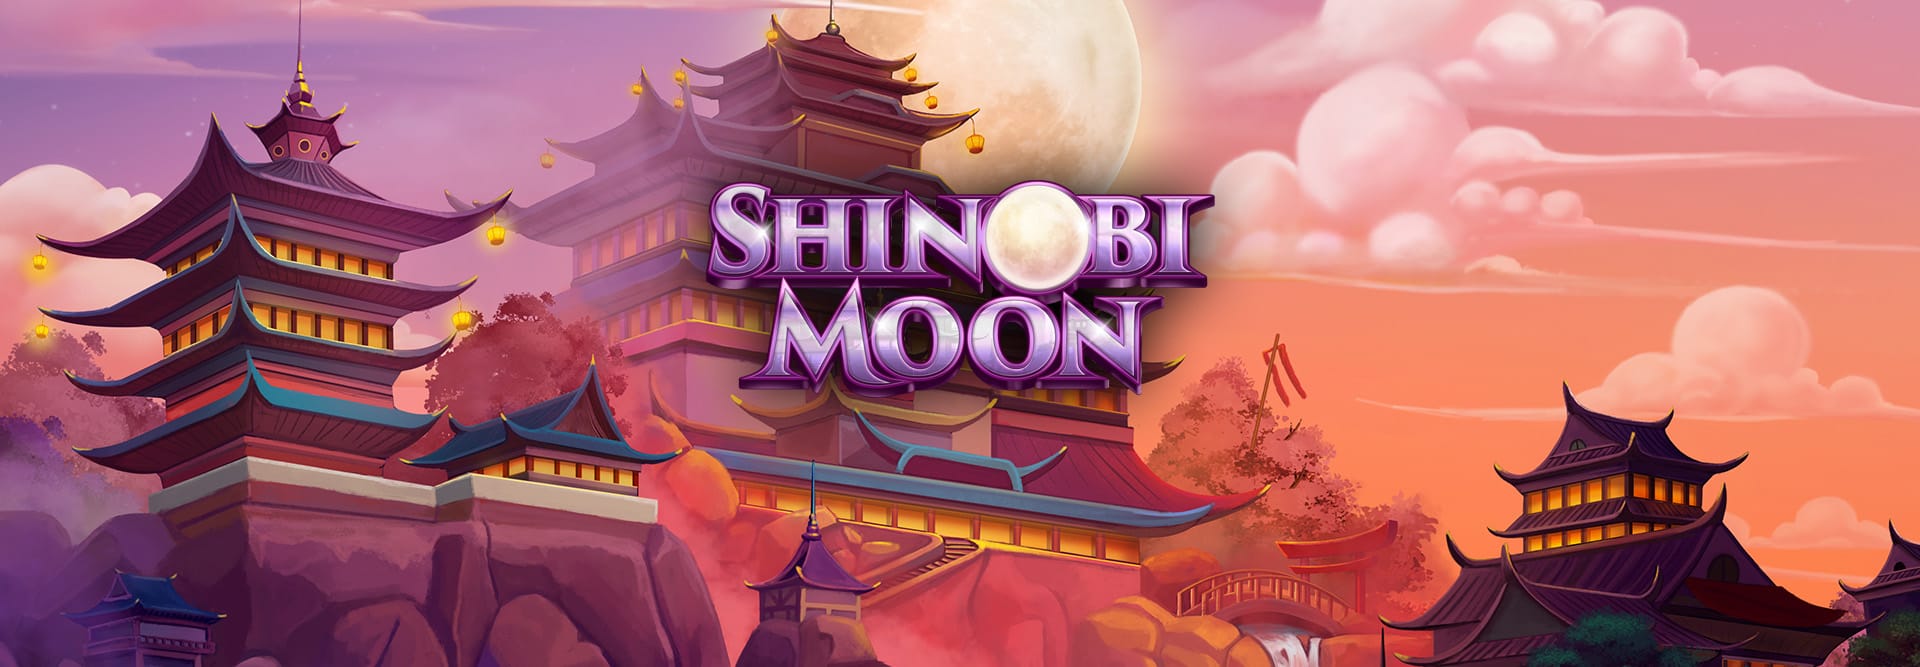 Shinobi Moon online slot